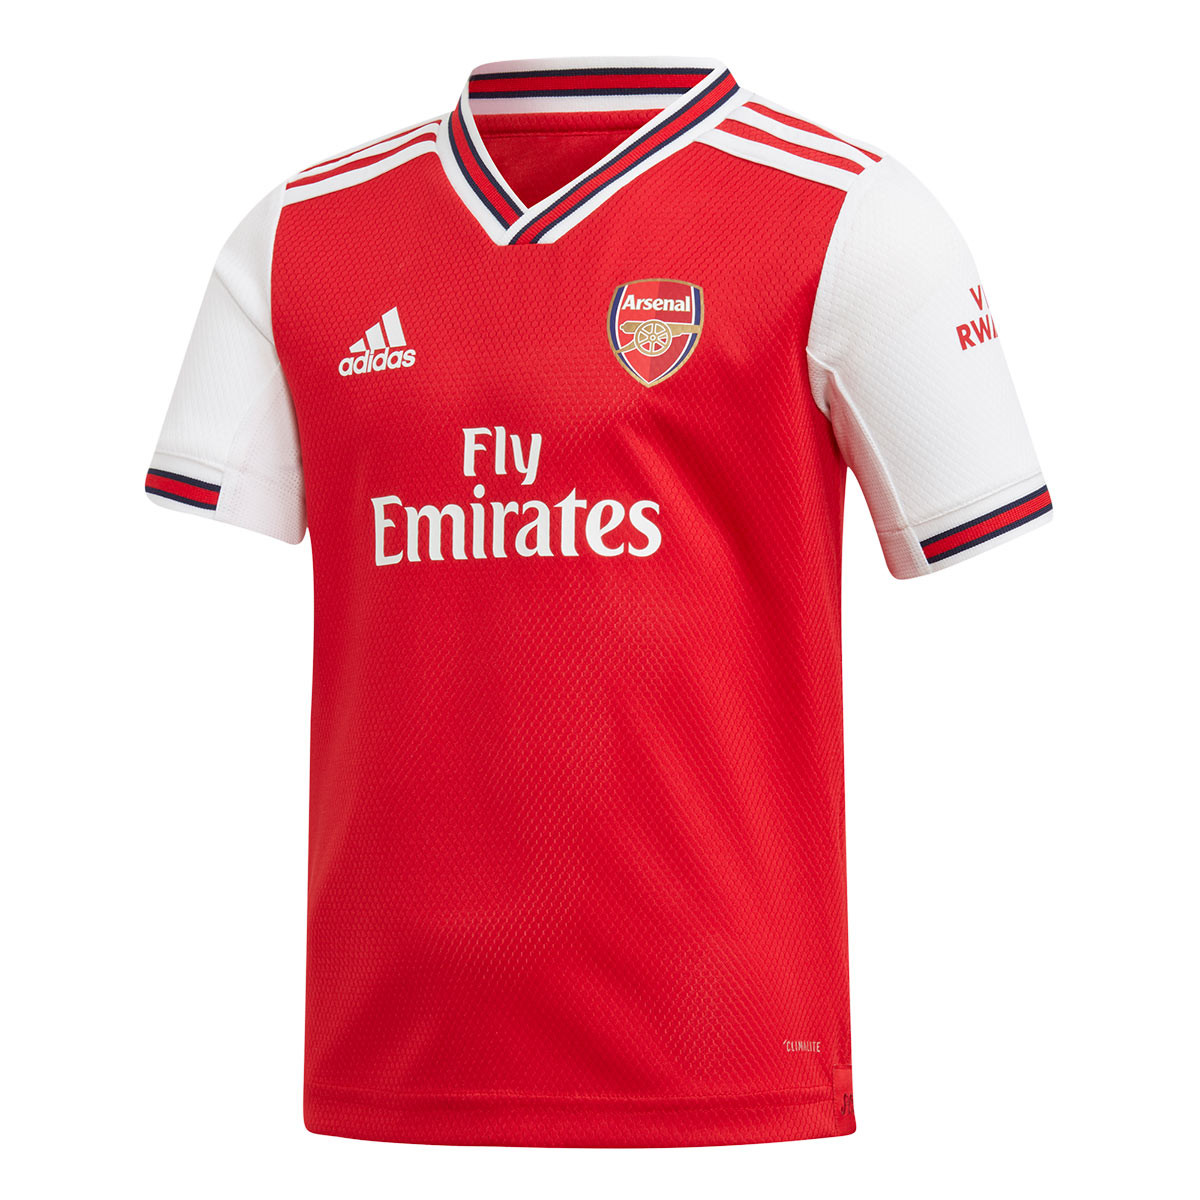 Kit Adidas Kids Arsenal Fc 2019 2020 Home Scarlet Football Store